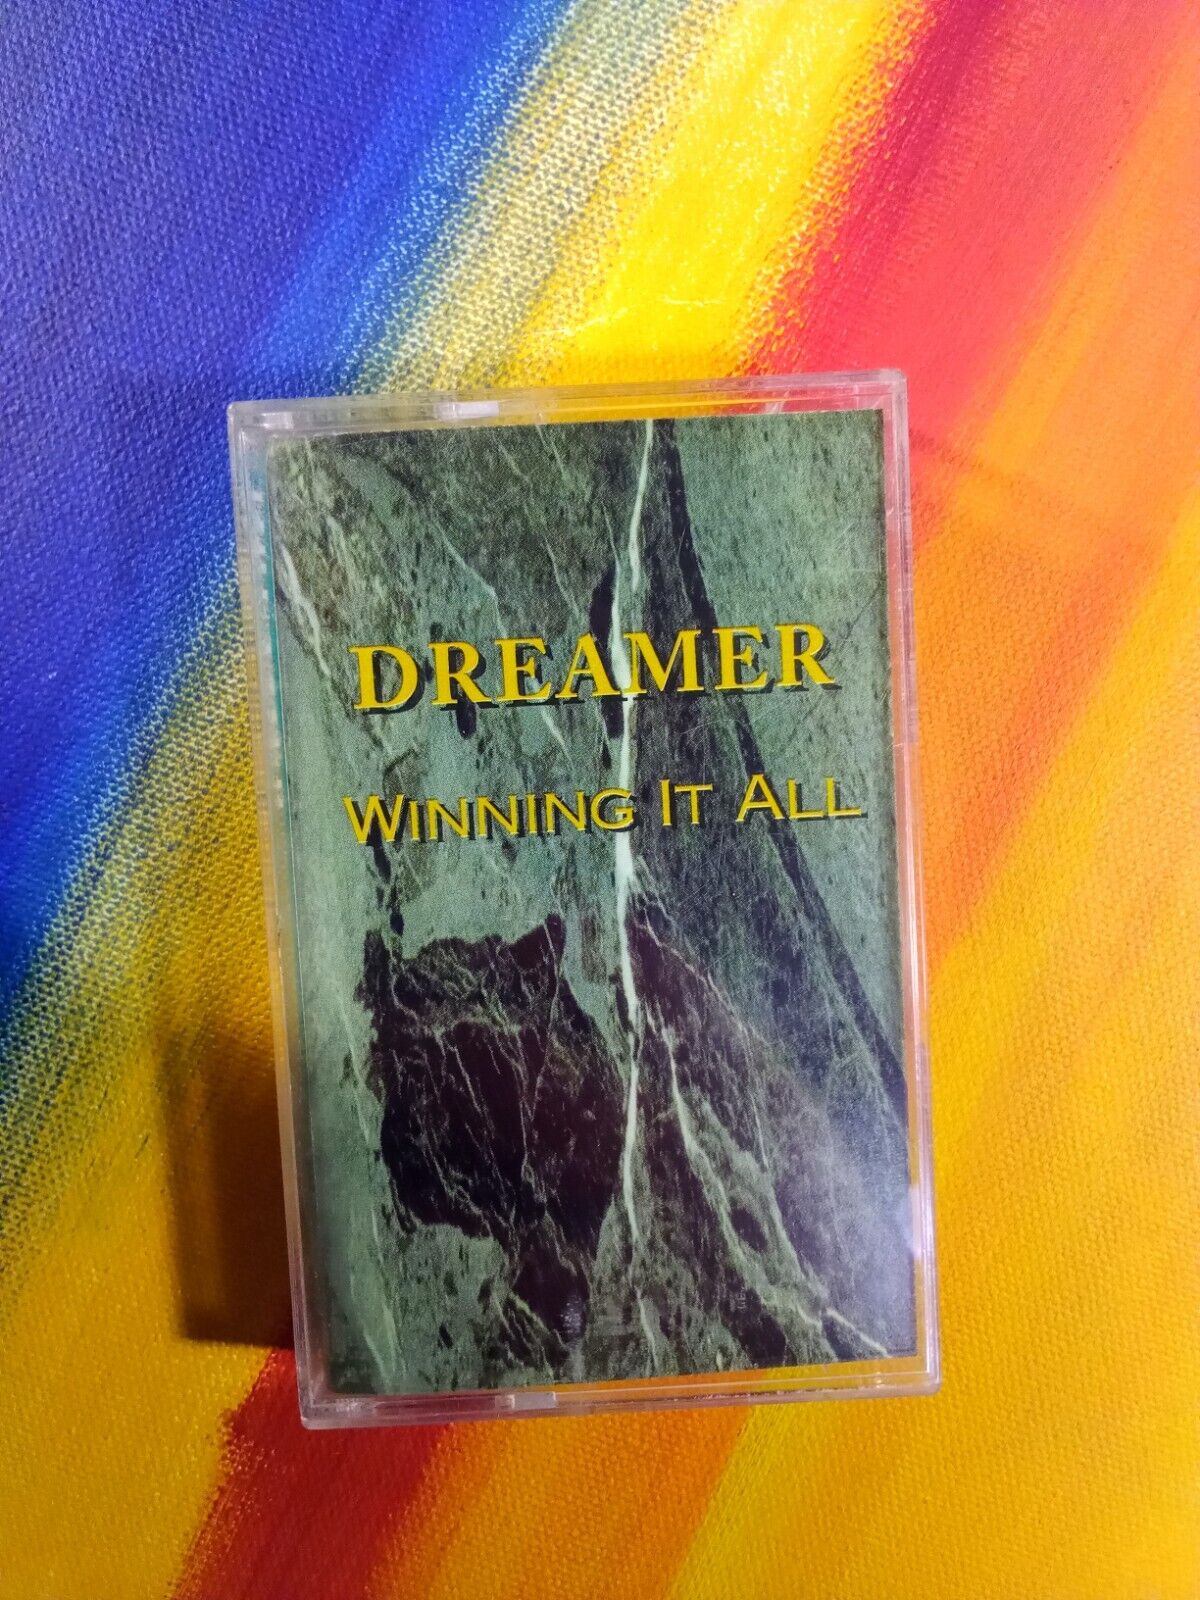 Winning It All Dreamer Plano Texas Uplifting Vocal Band Album Cassette Tape